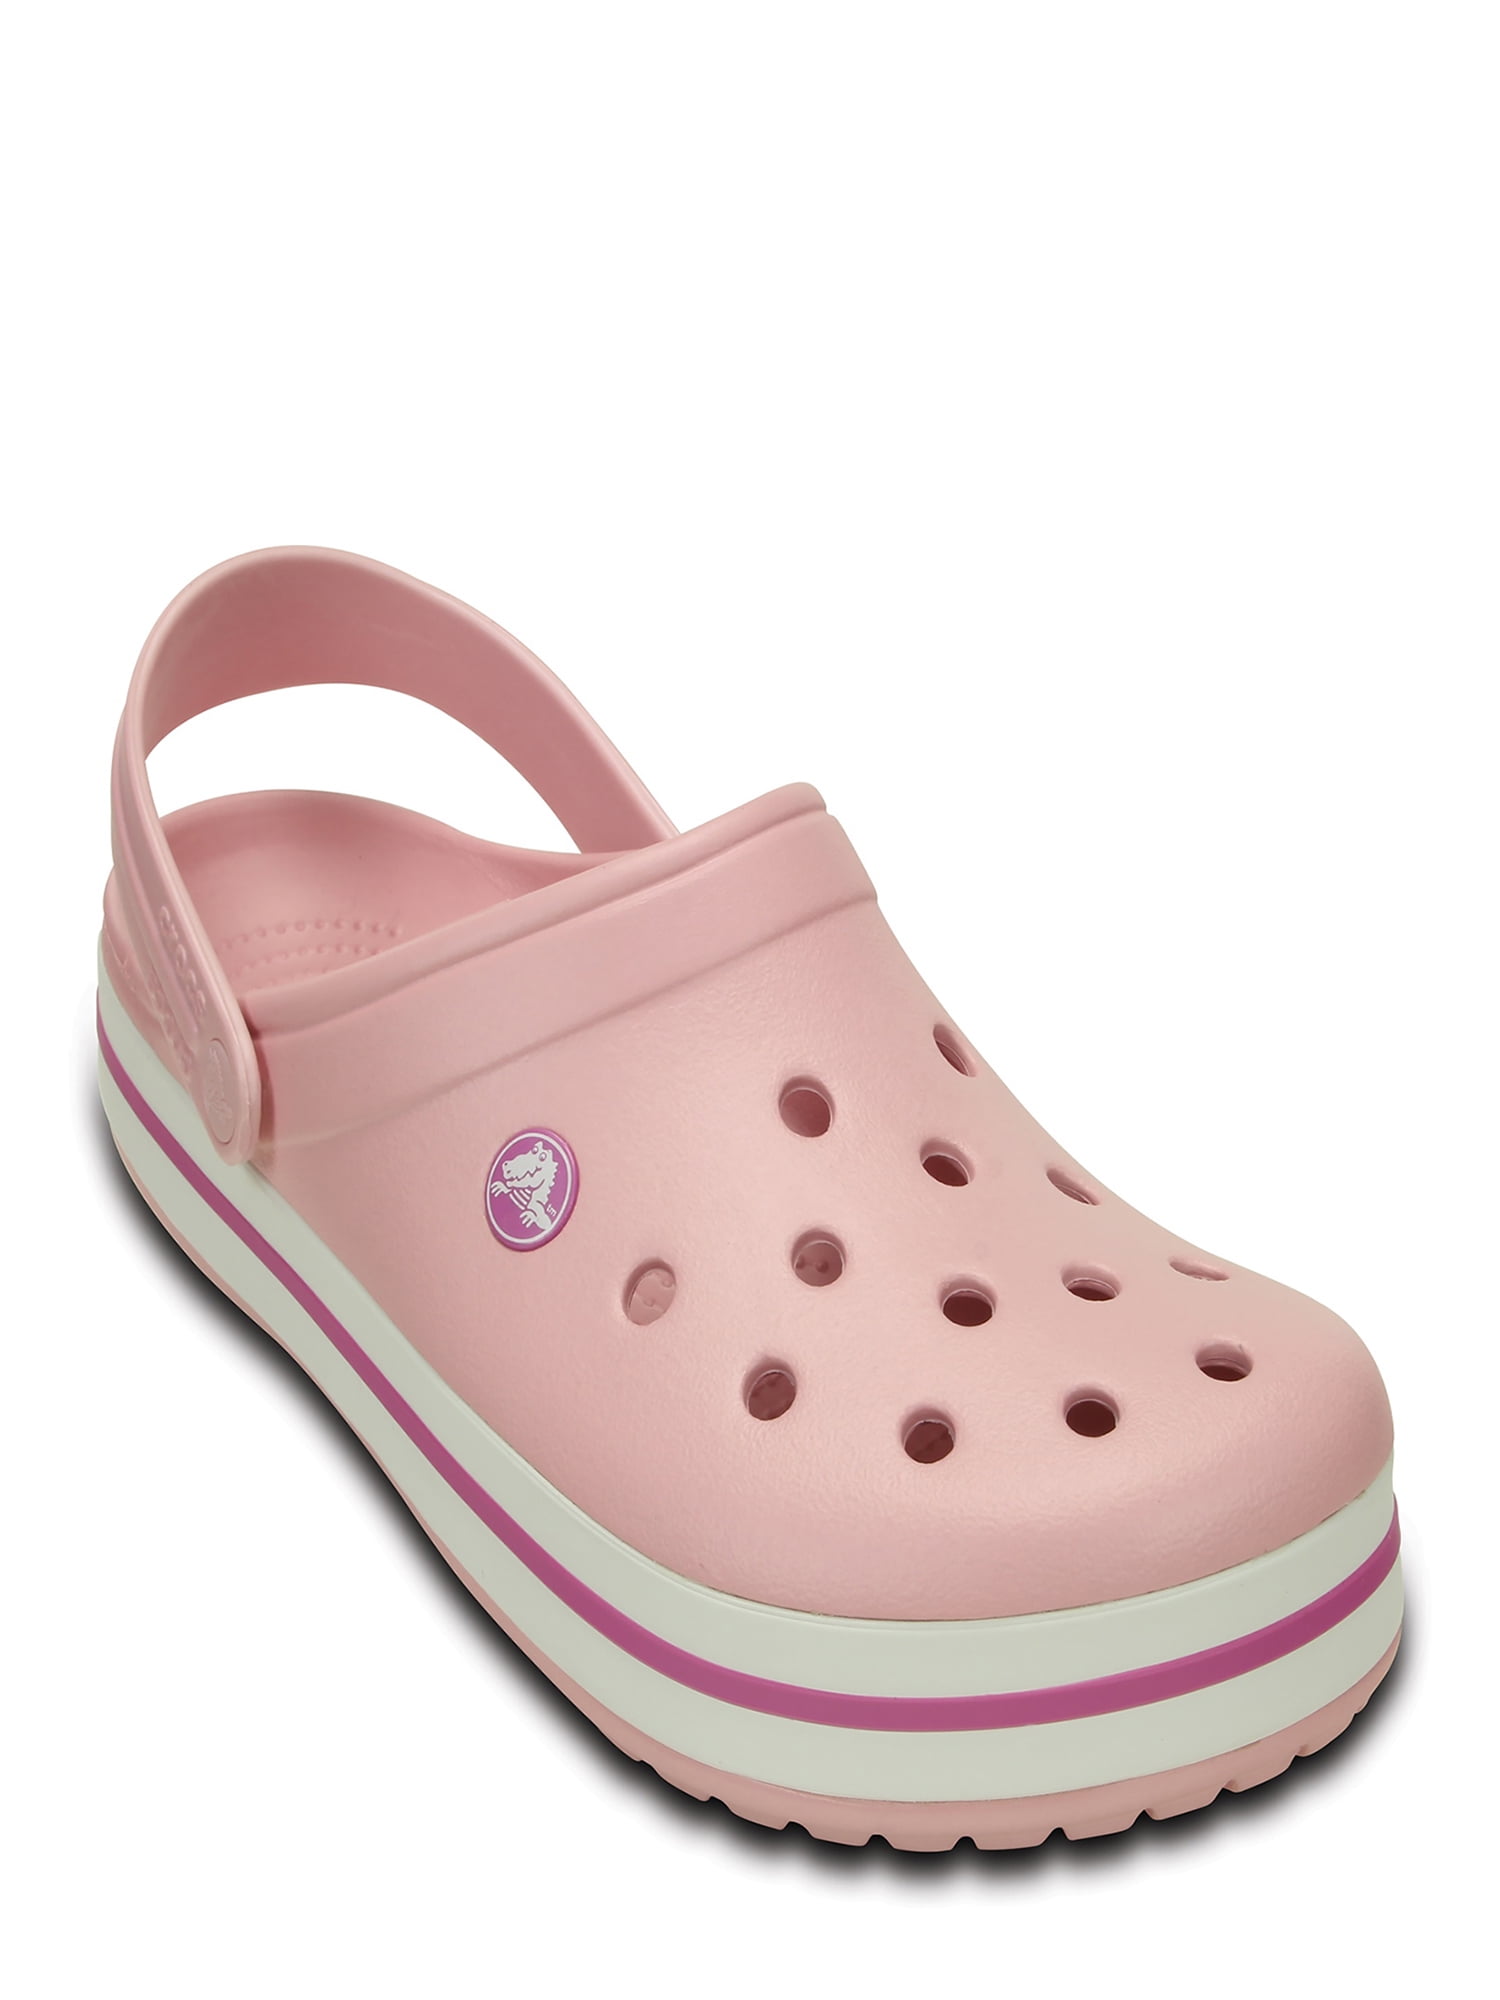 pale pink crocs